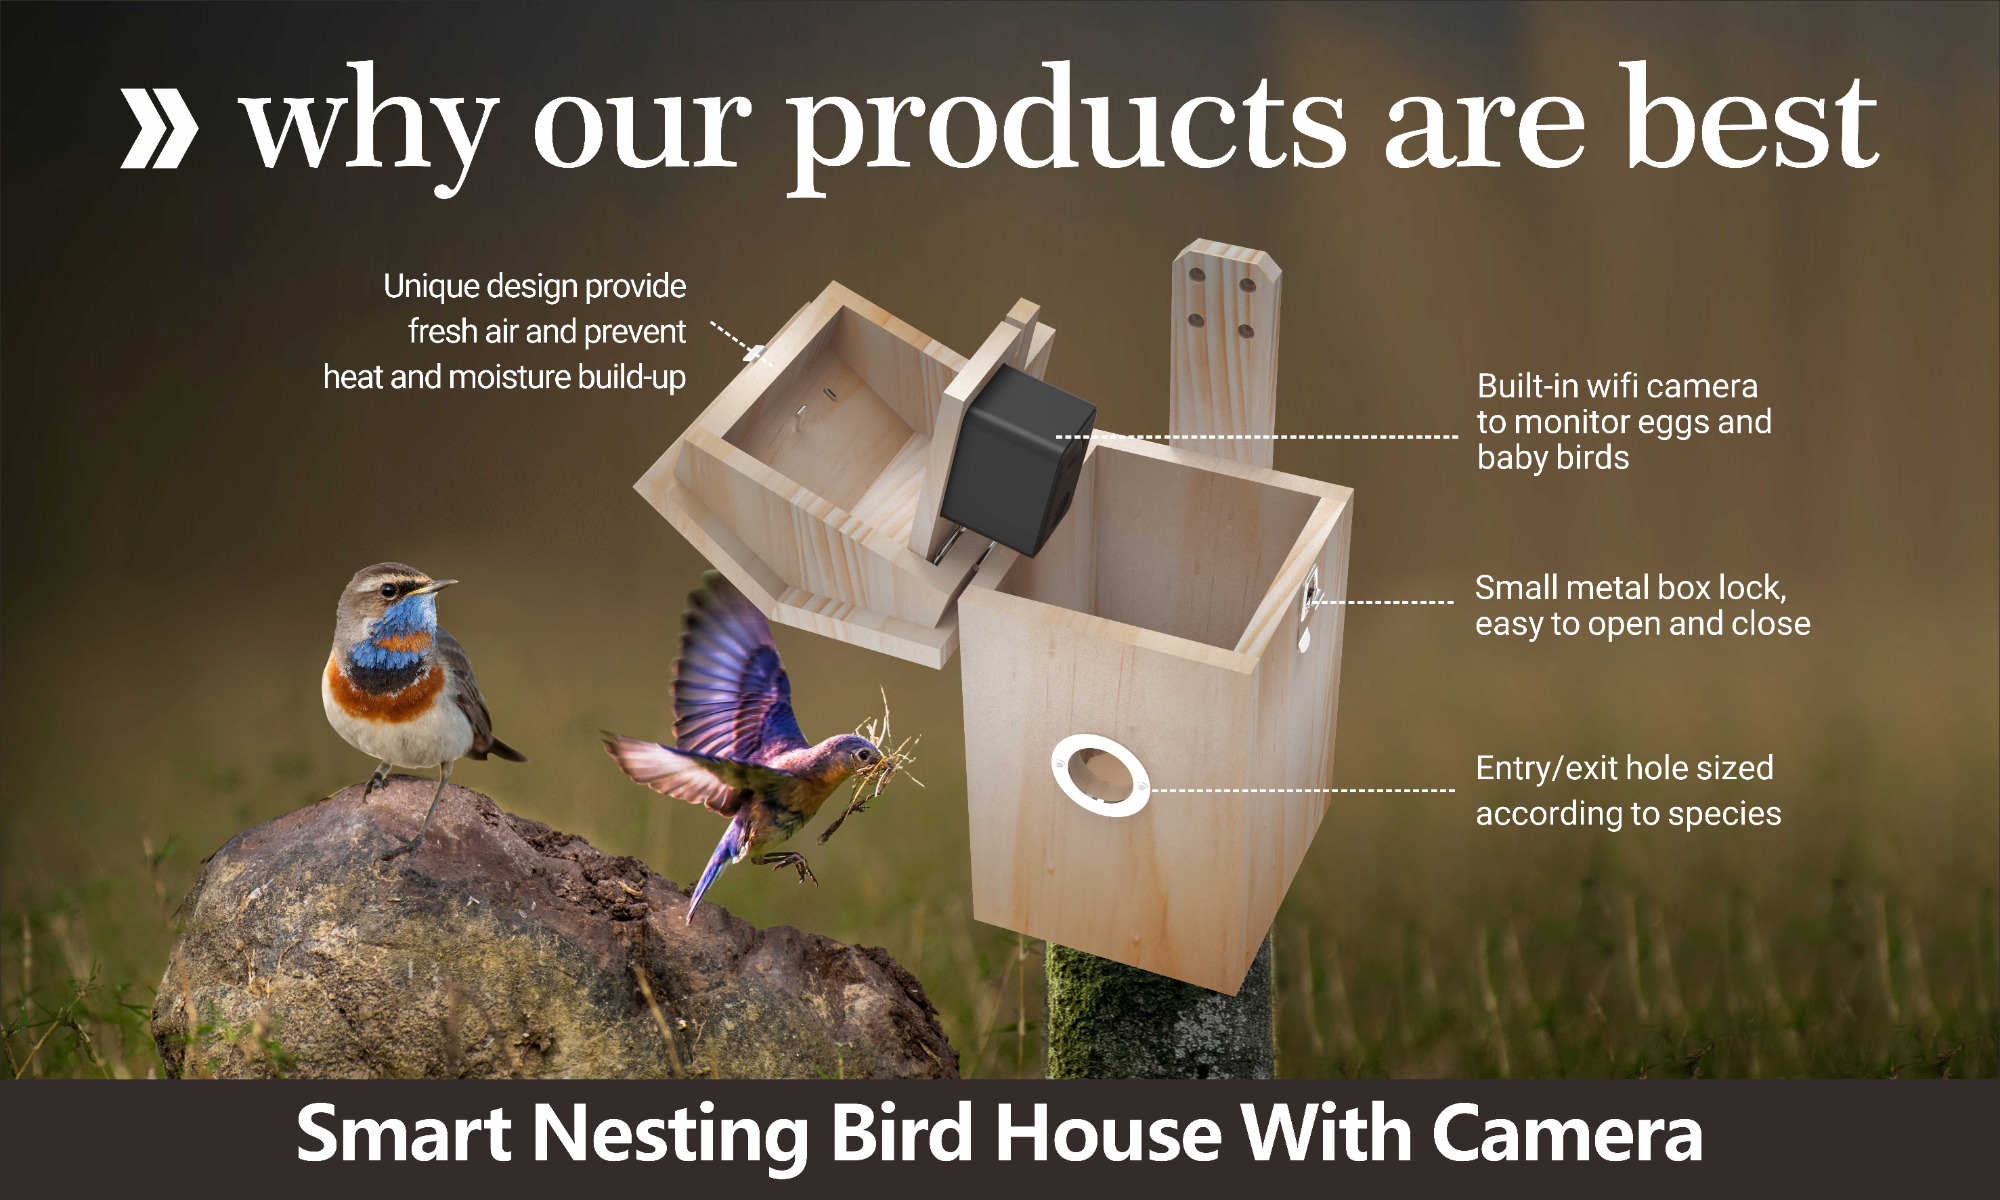 Smart Nesting Bird House With Camera